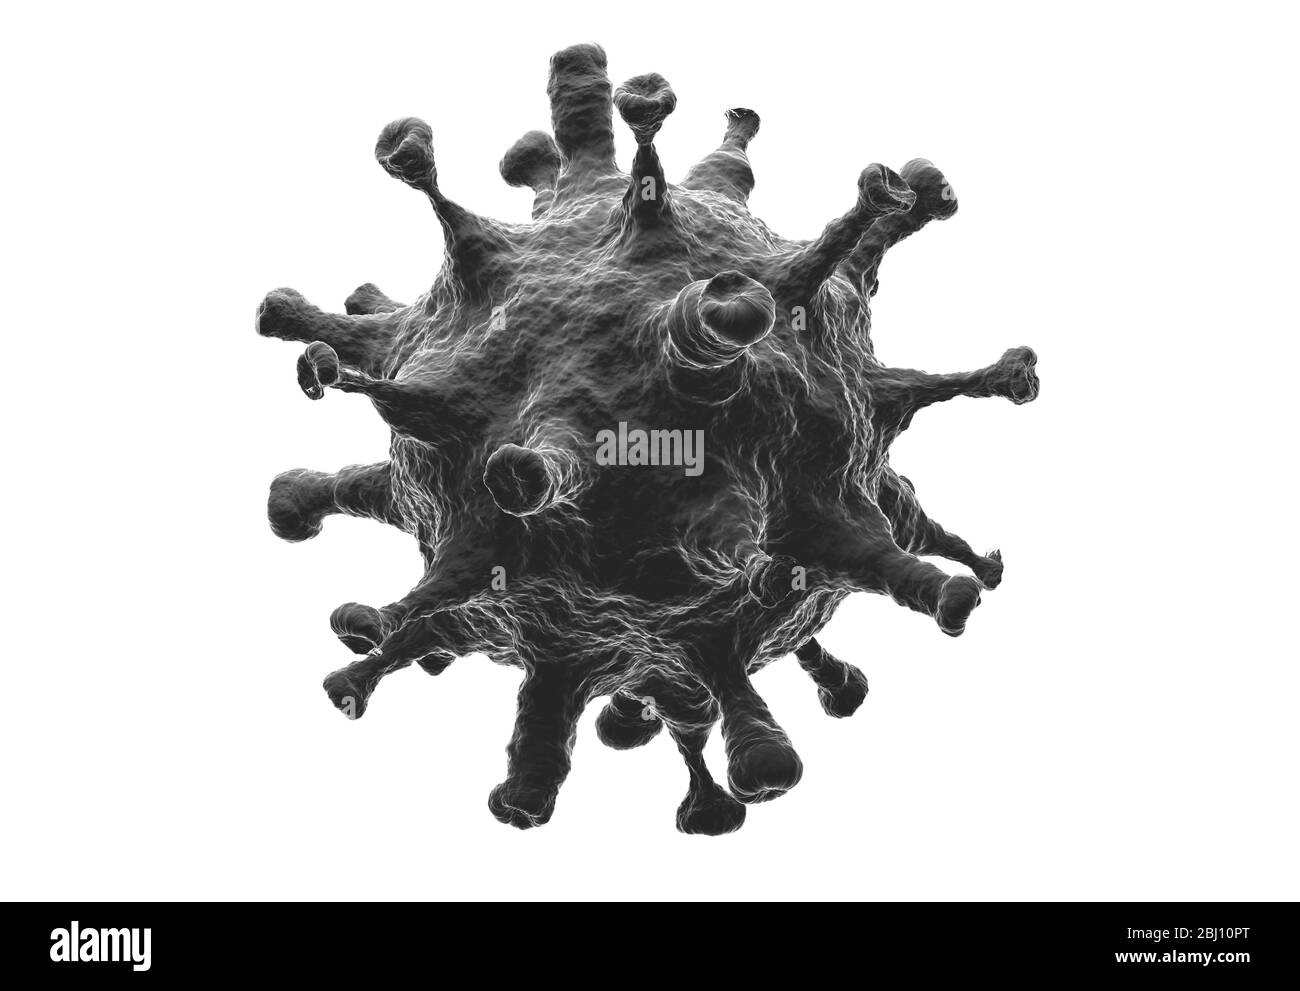 Coronavirus-Krankheitszellen, 3D-Rendering. Vergrößerte Darstellung einer Viruszelle neue 2019 neuartige Coronavirus (COVID-19) Erreger-Keiminfektion Ausbruchszelle w Stockfoto